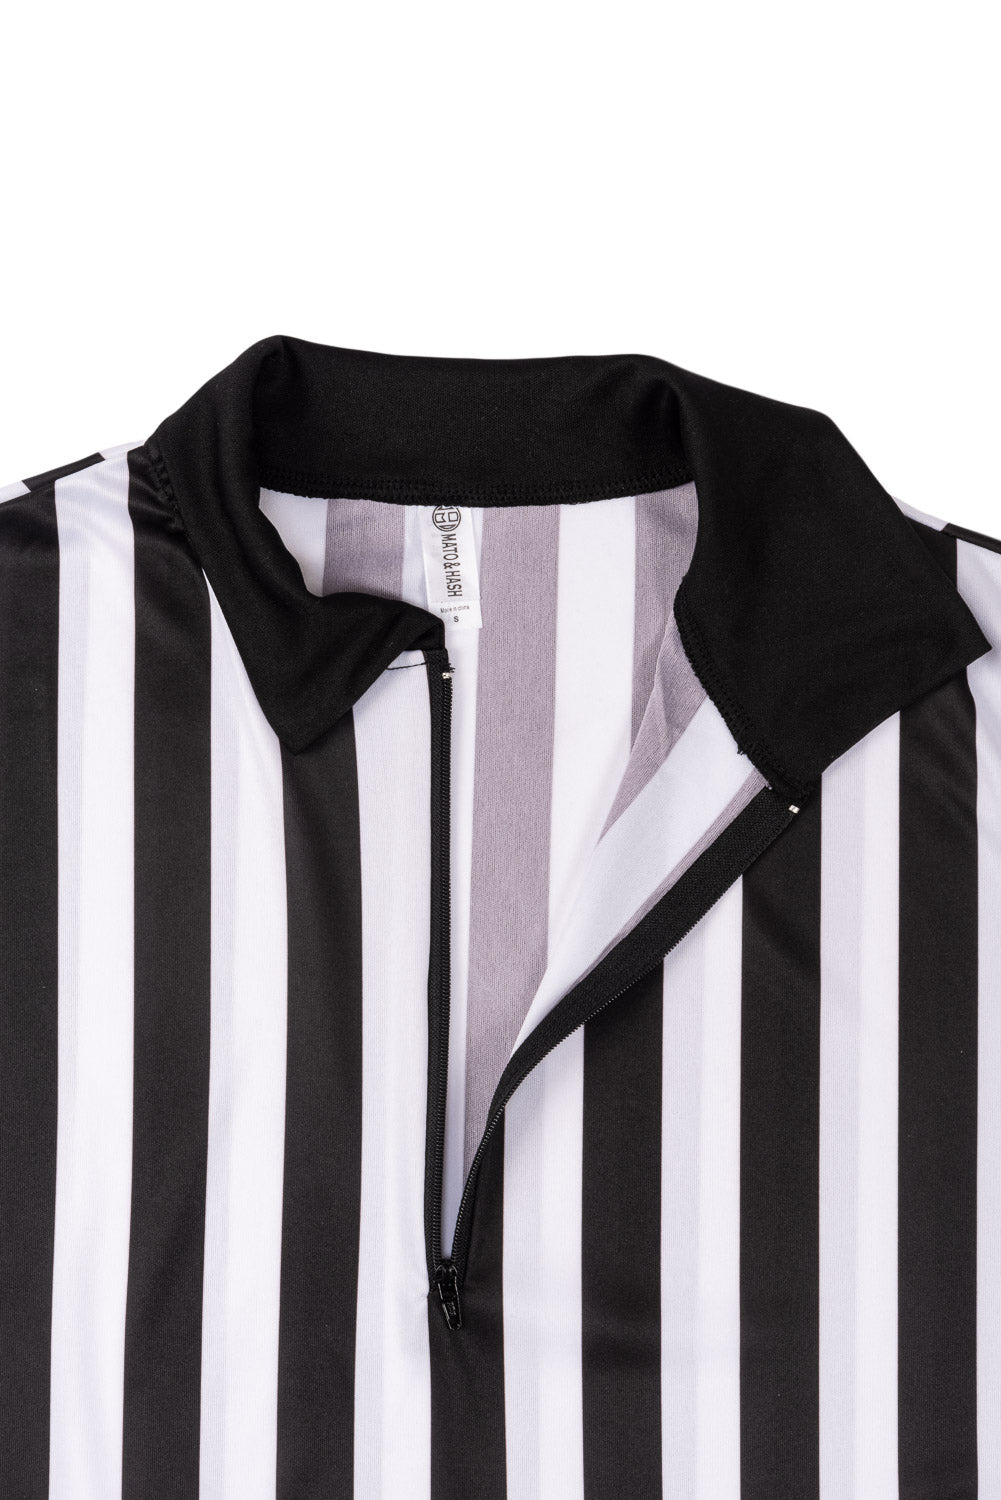 Mato & Hash Men's 1/4 Zip Referee Shirt W/ Embroidery - Mato & Hash